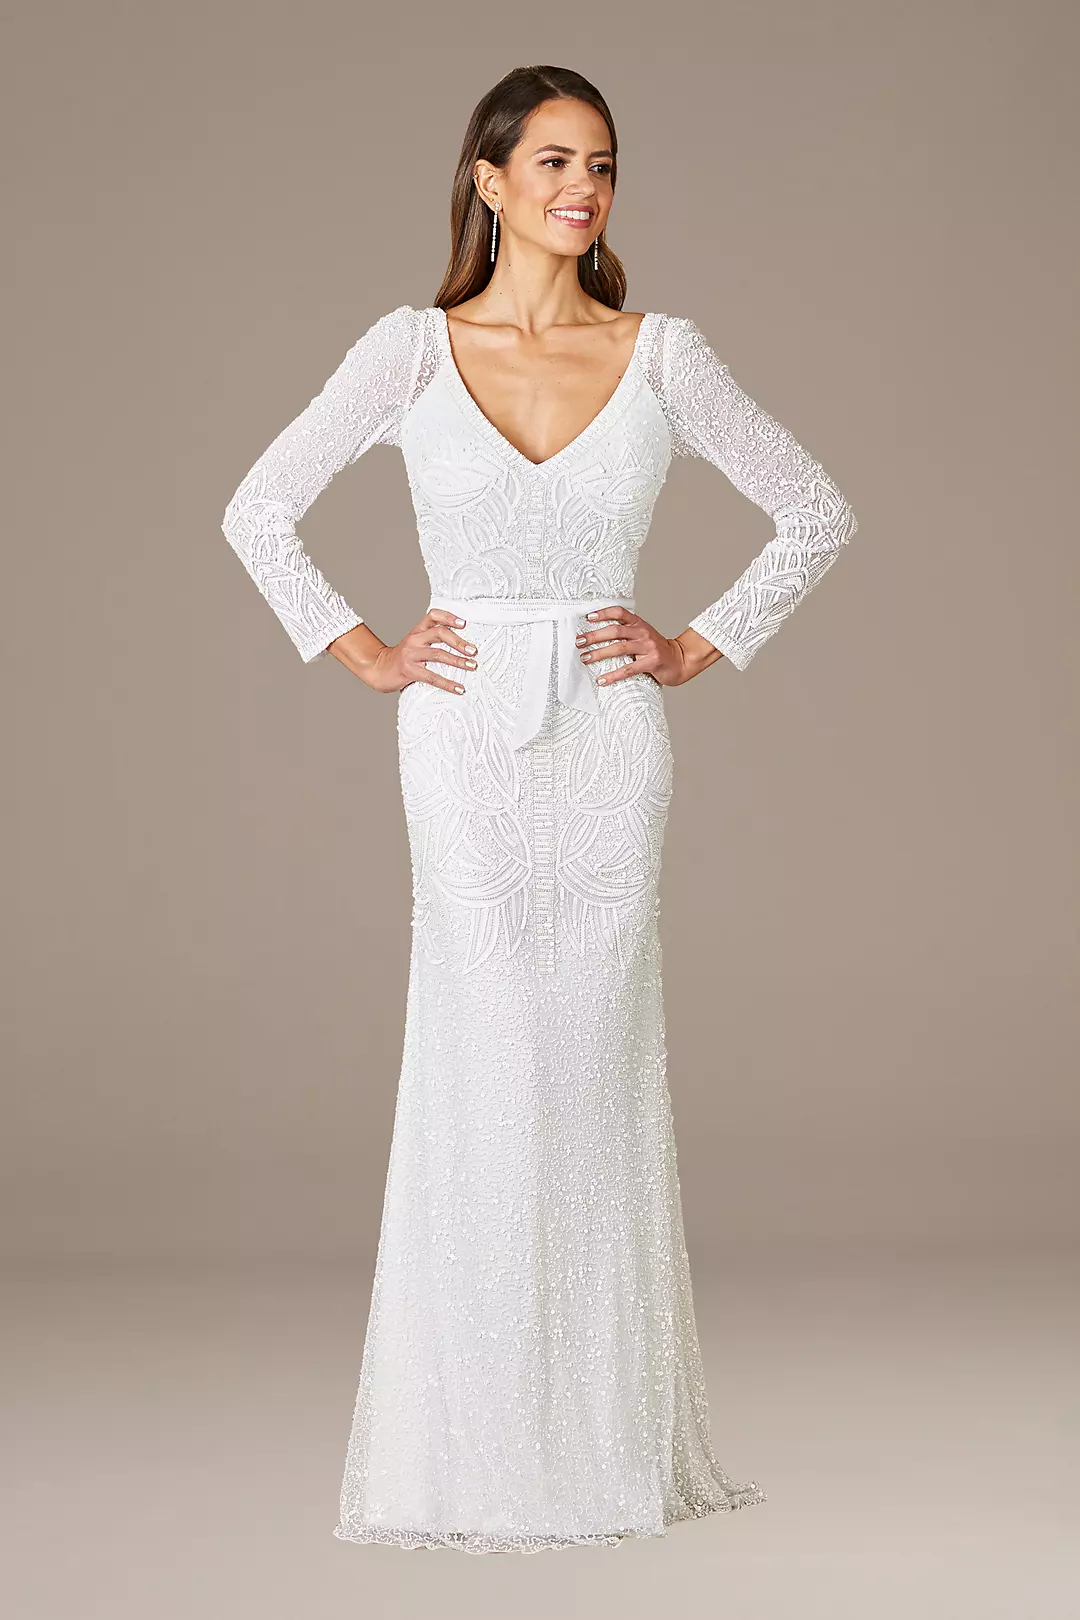 Lara Grant Long Sleeve Beaded Wedding Dress Image